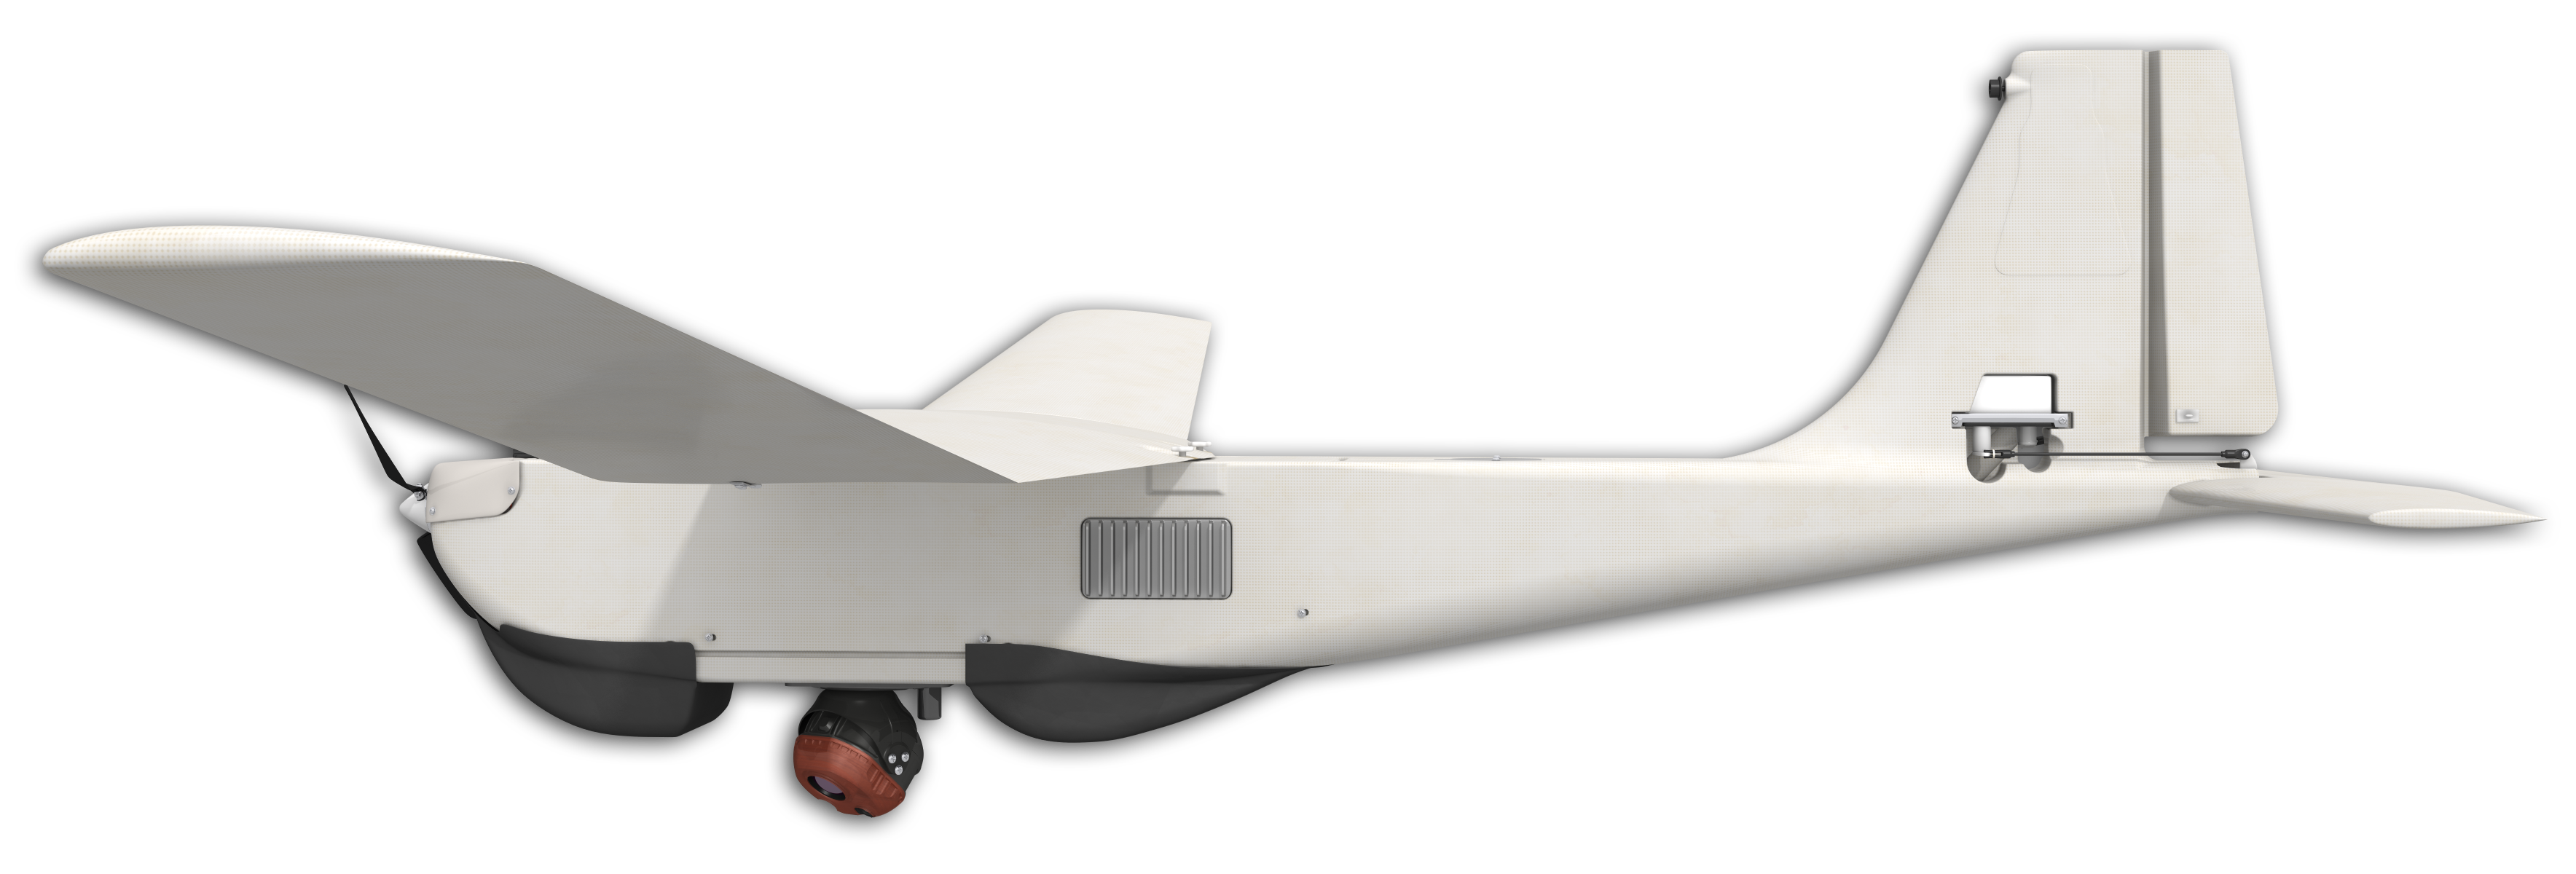 Puma AE Small UAS (UAV) - AeroVironment 